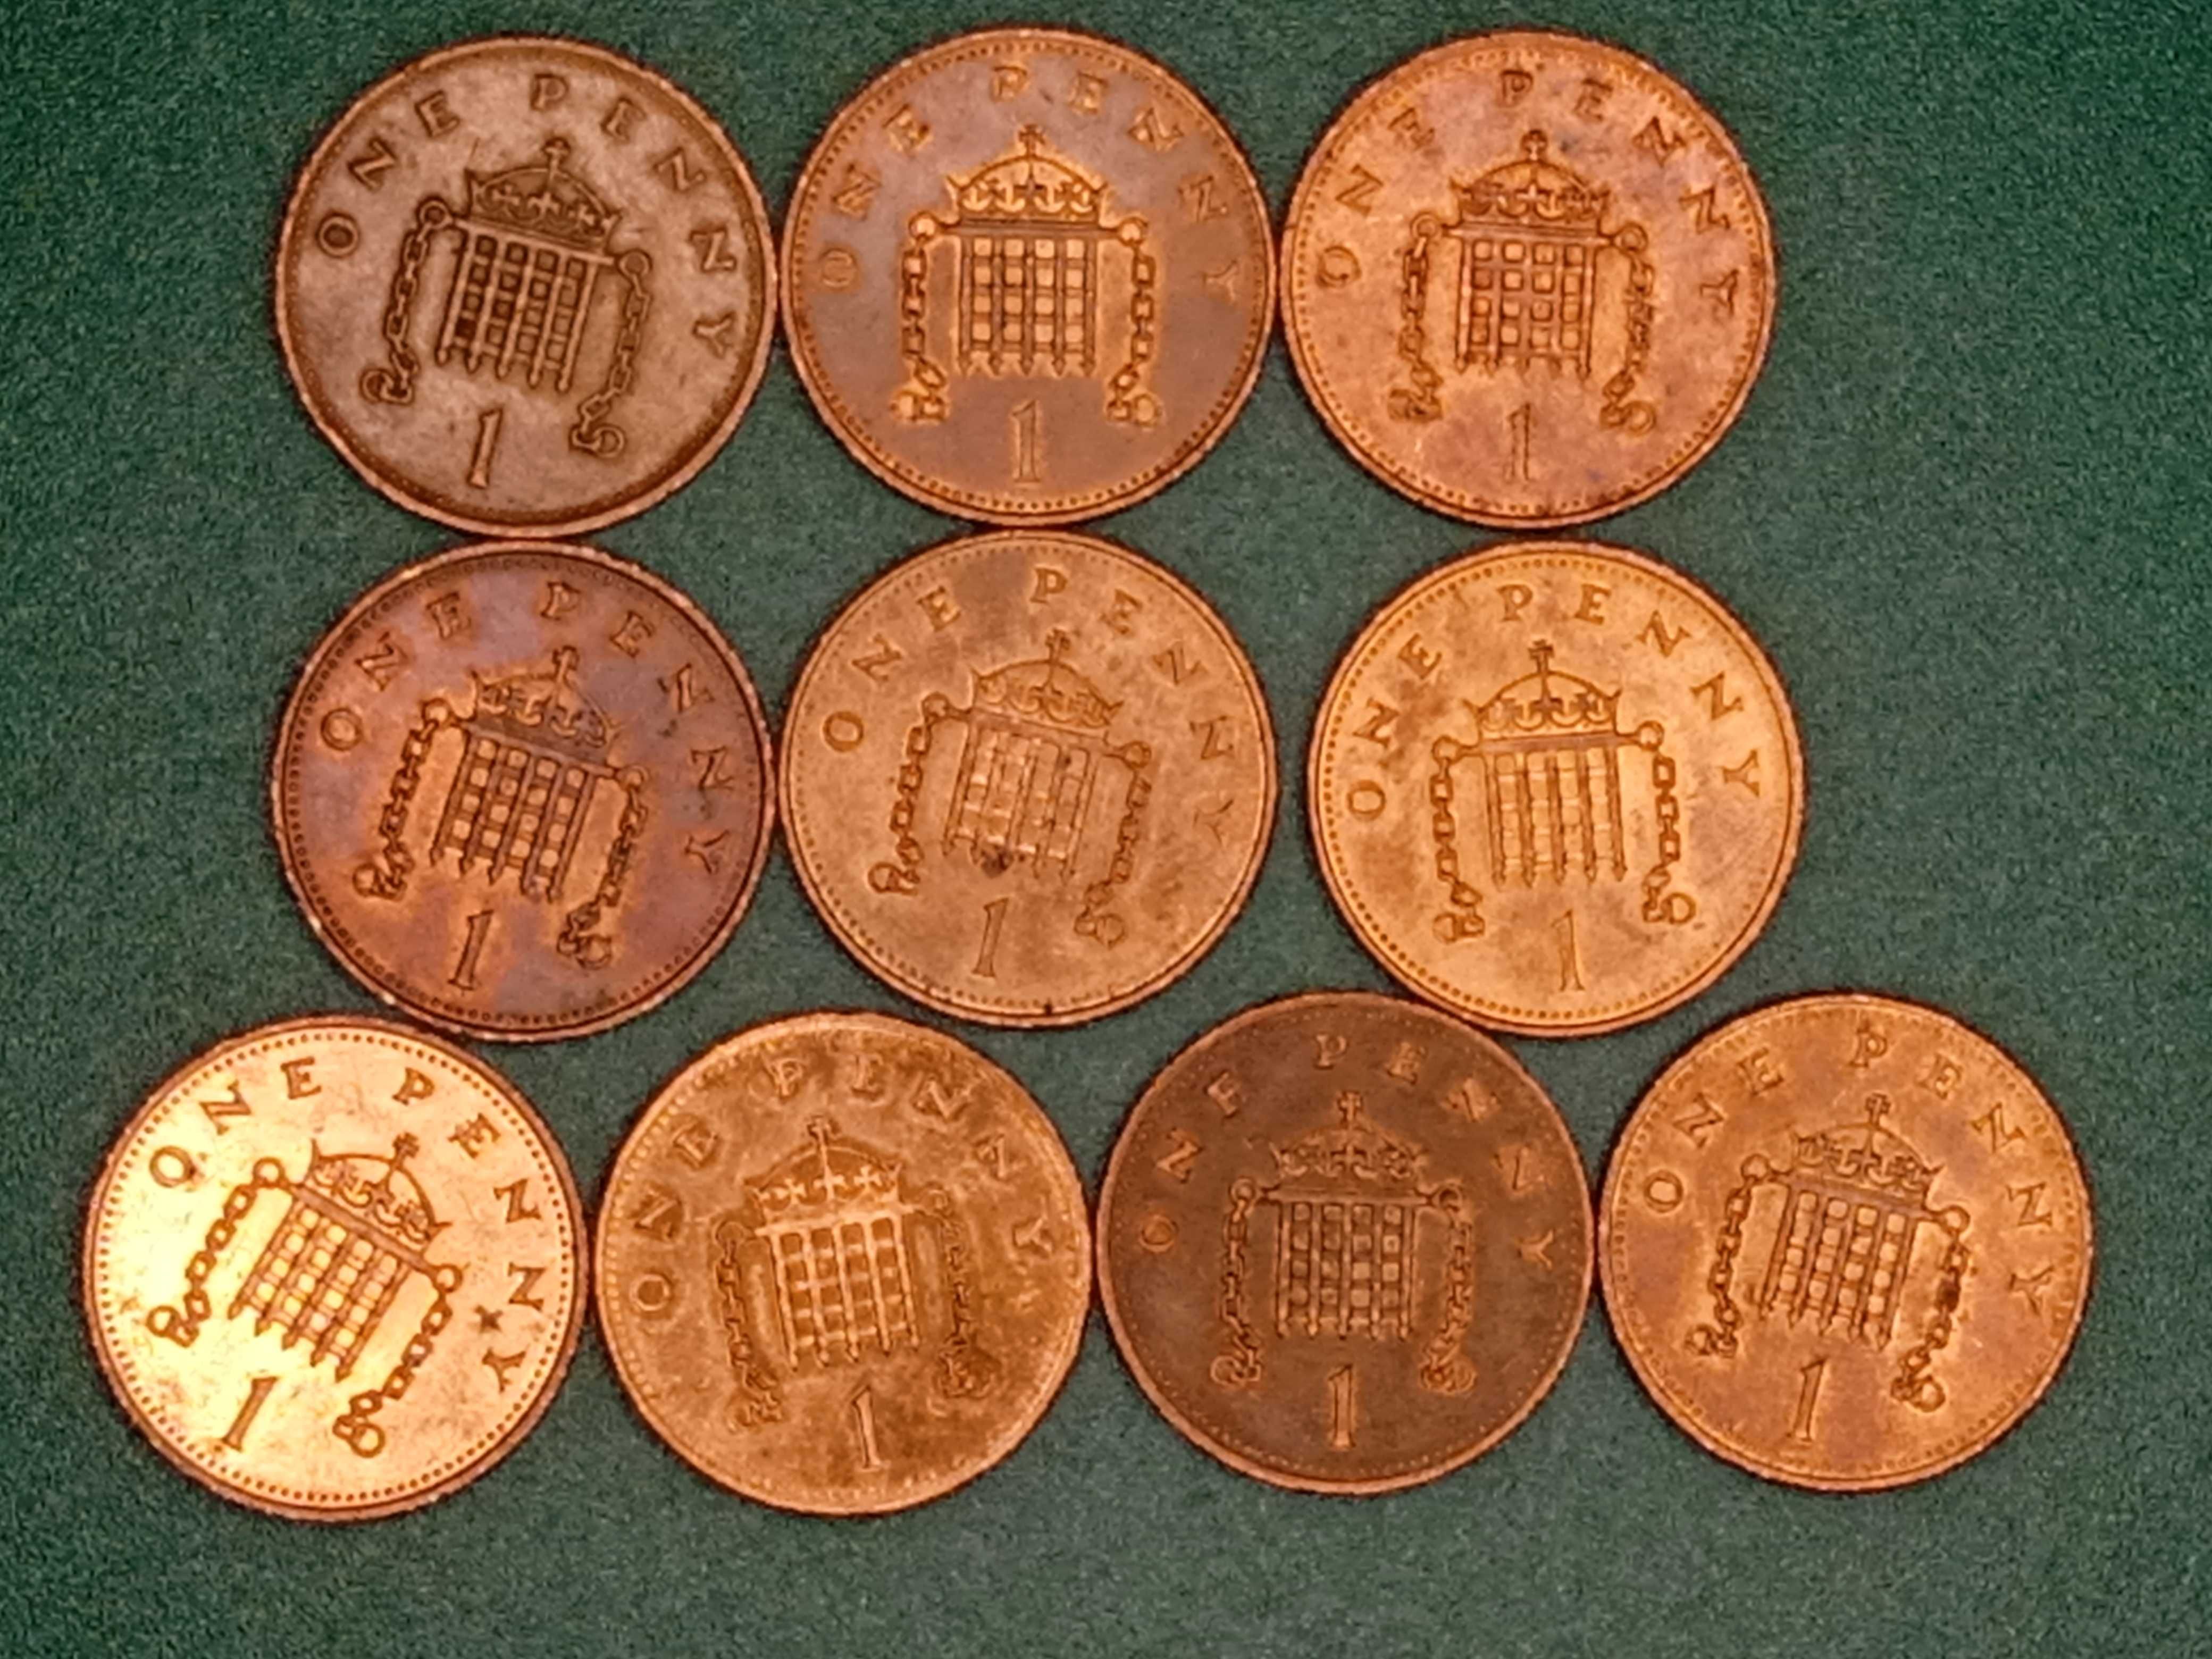 1 / ONE PENNY GREAT BRITAIN 1982-1991,1998  1 пенни, Великобритания